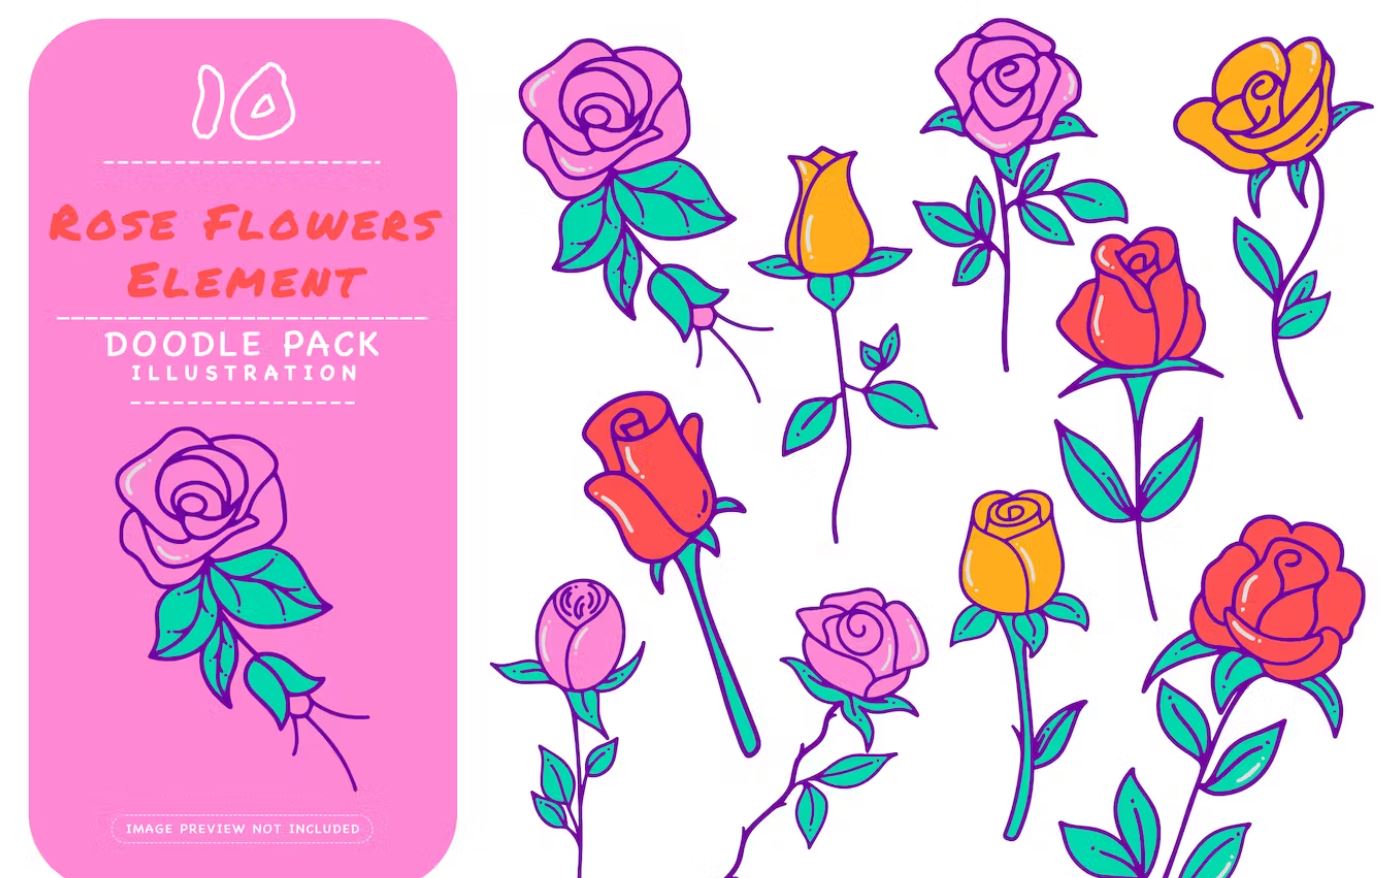 Rose-petal-overlay-for-floral-backgrounds